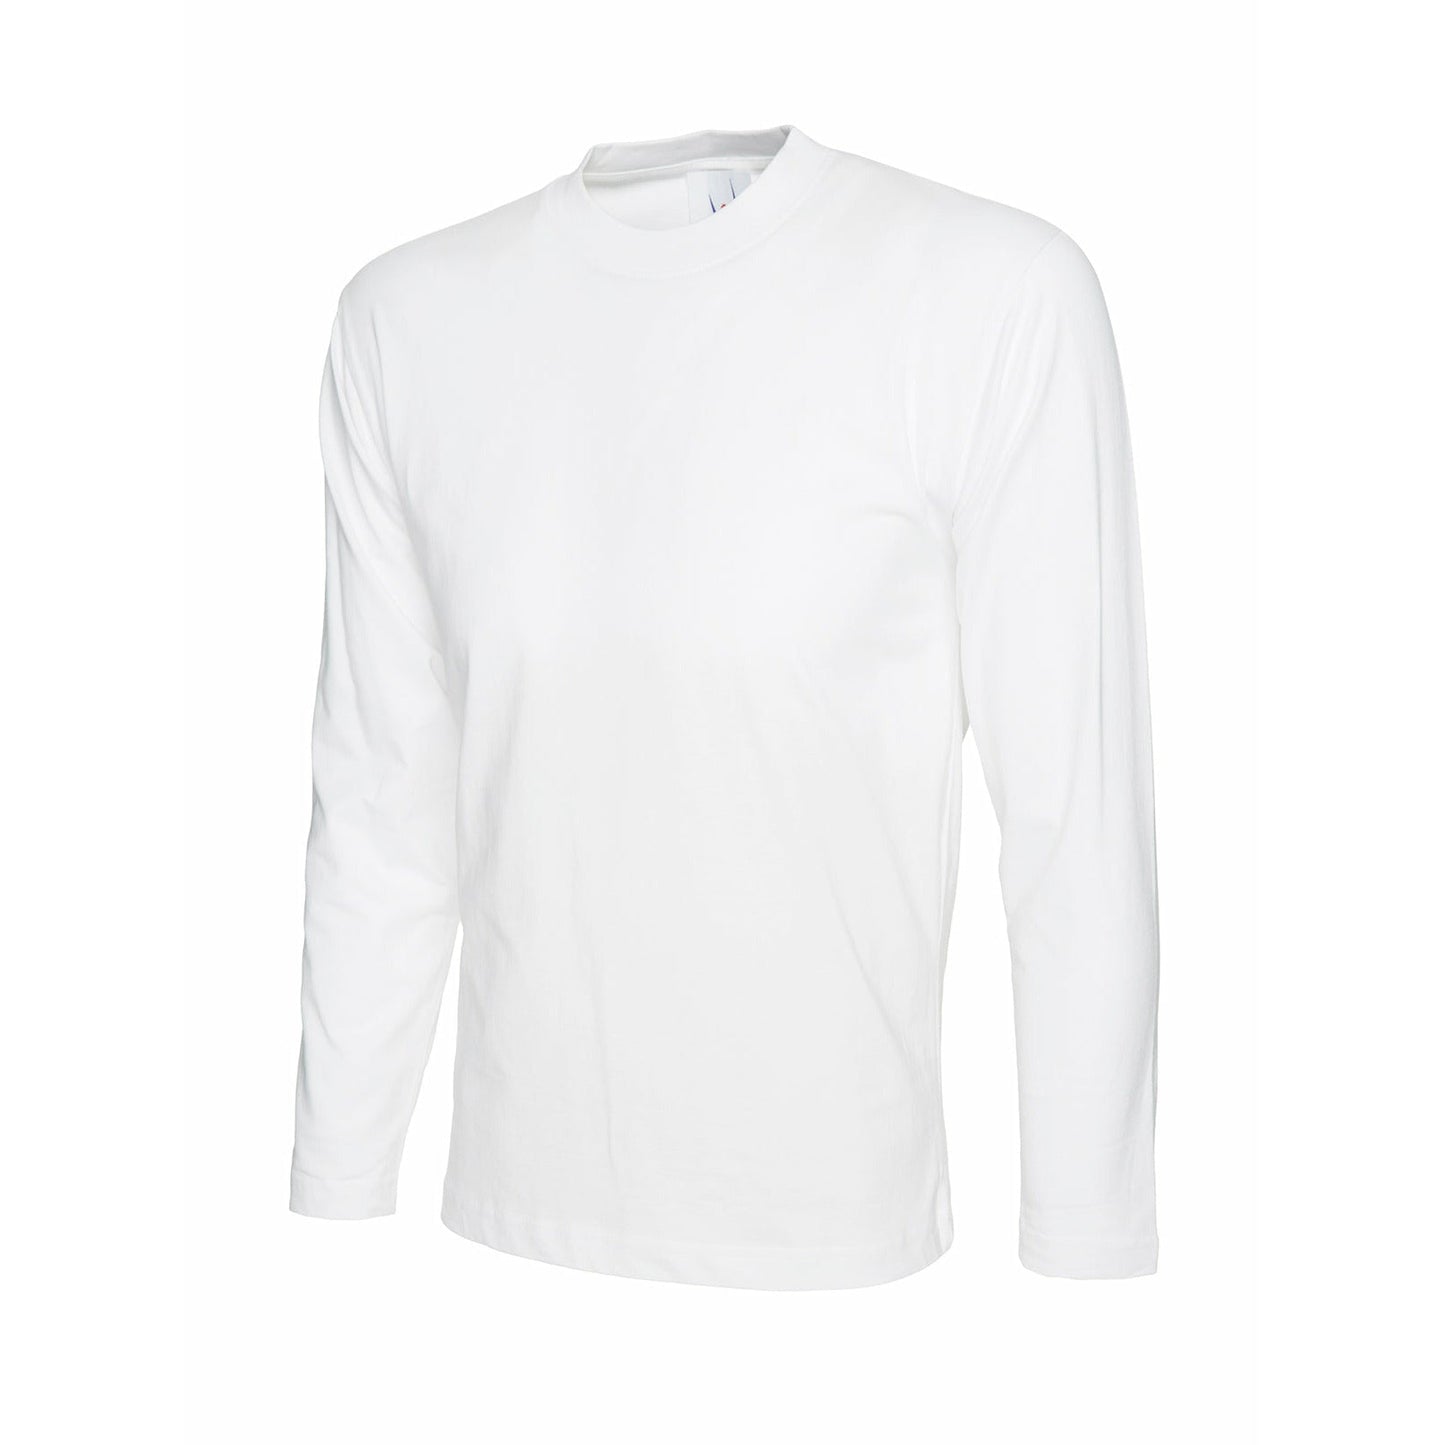 White long-sleeve t-shirt